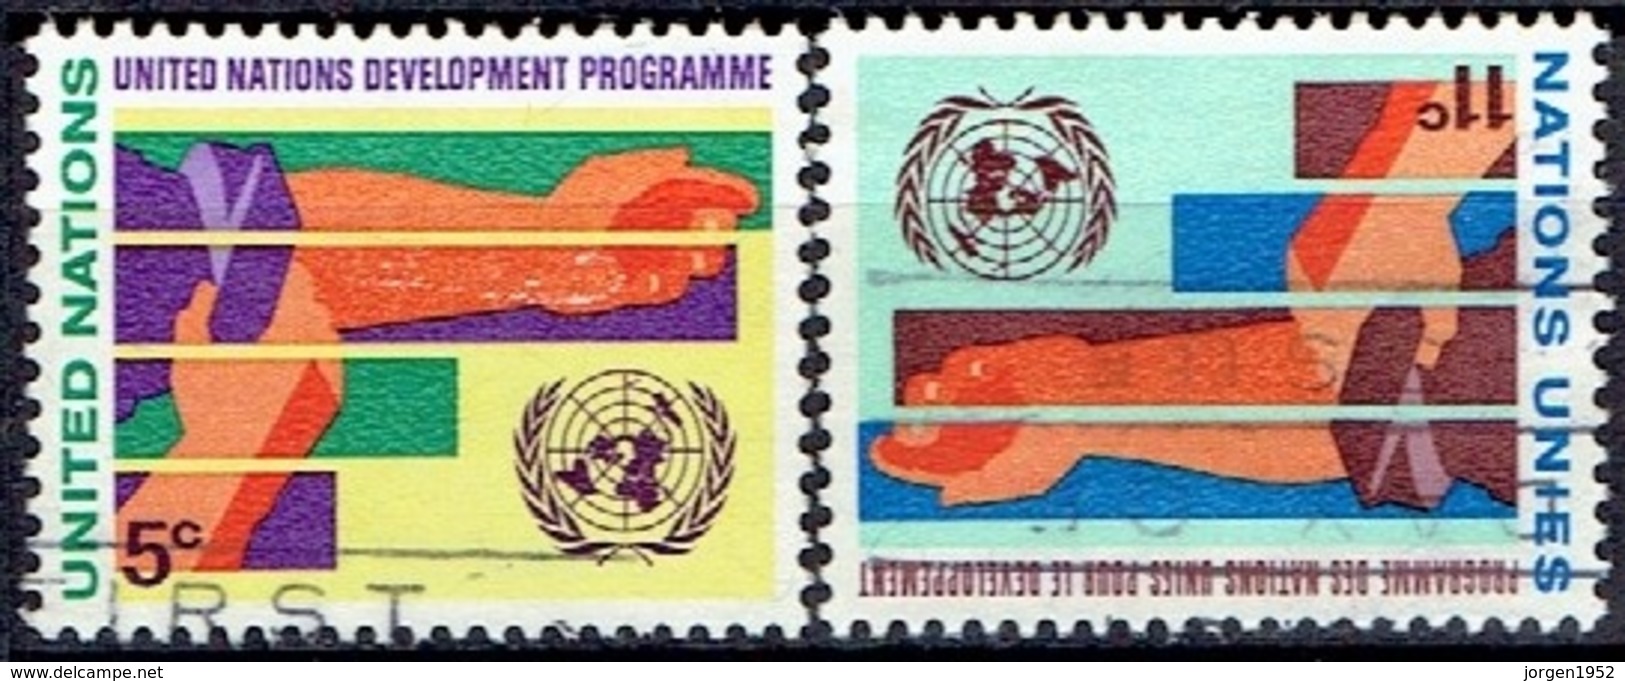 UNITED NATIONS # NEW YORK FROM 1967 STAMPWORLD 174-75 - Gebruikt